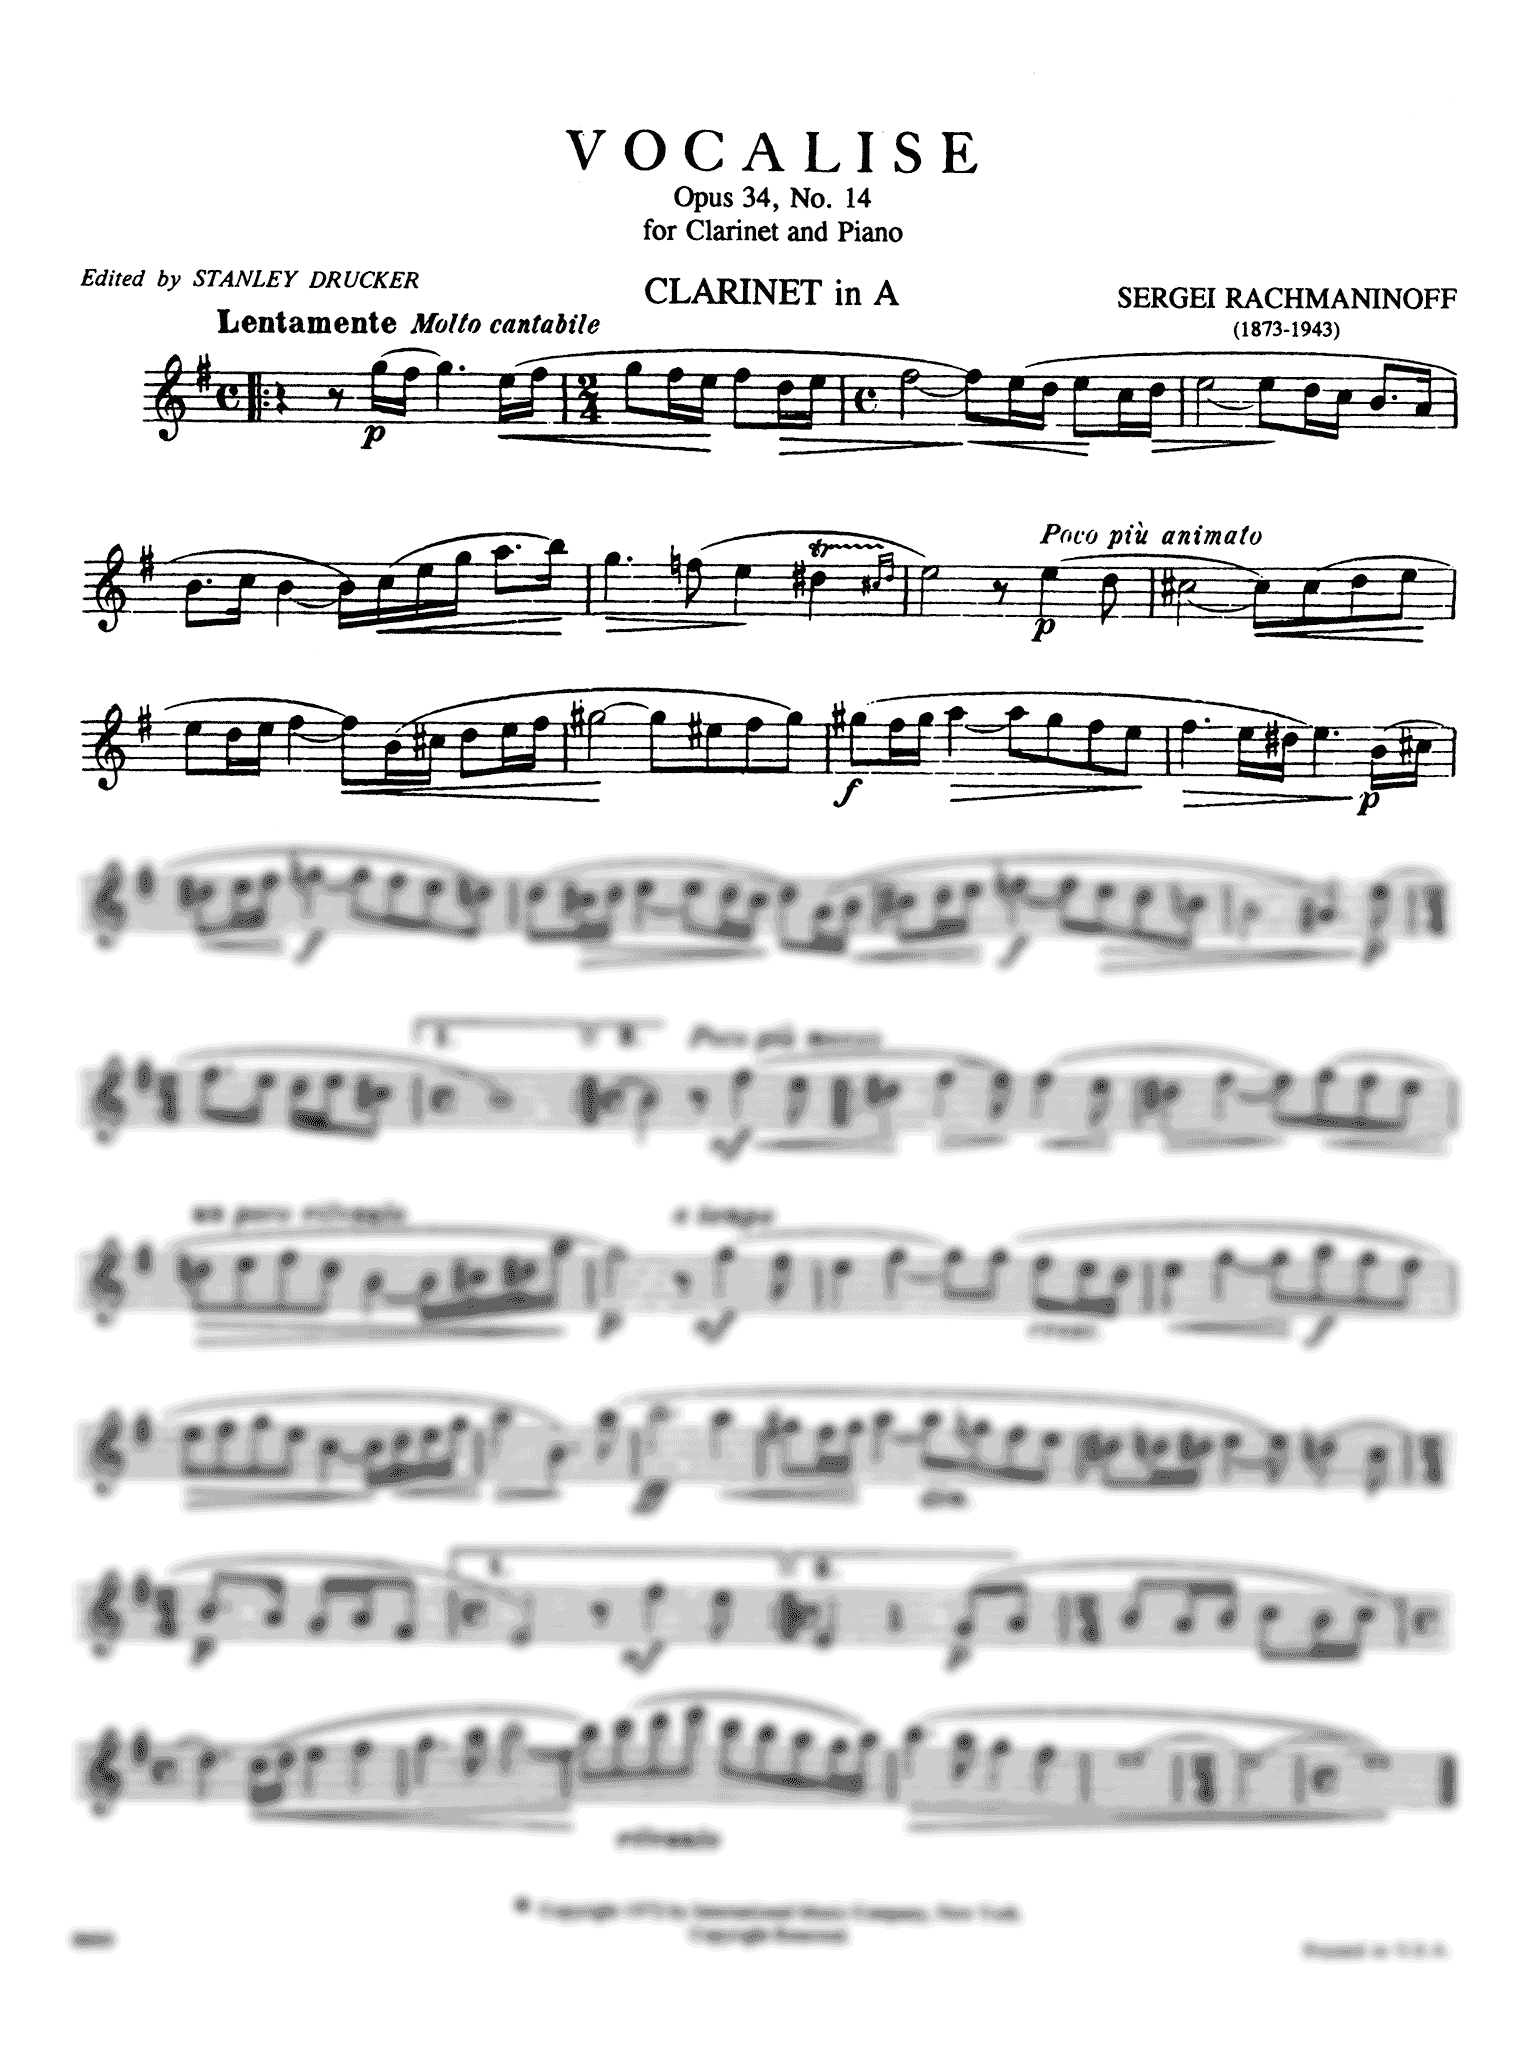 Rachmaninoff Vocalise, Op. 34 No. 14 clarinet part